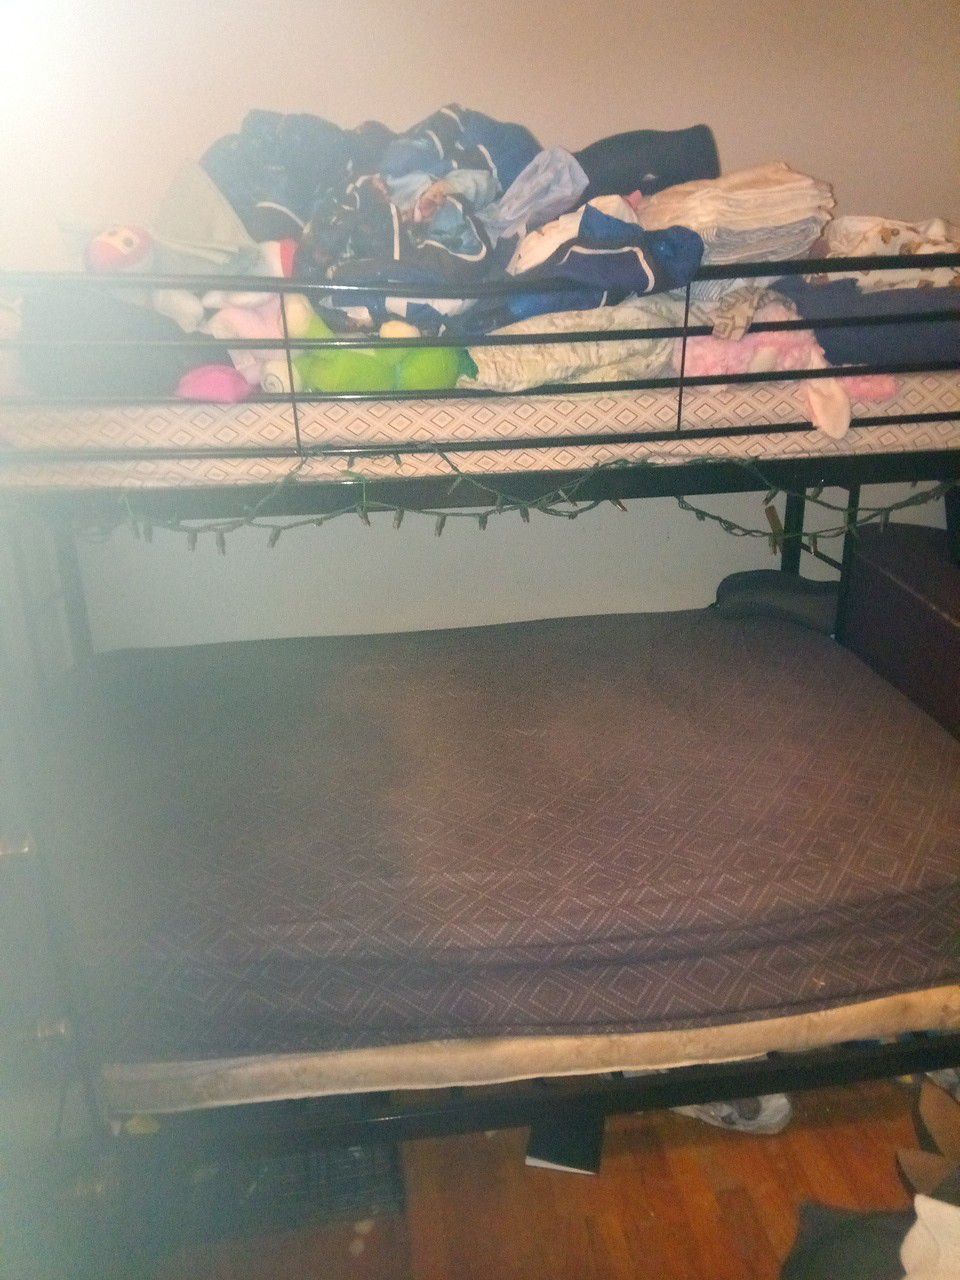 Bunk bed 250$ obo